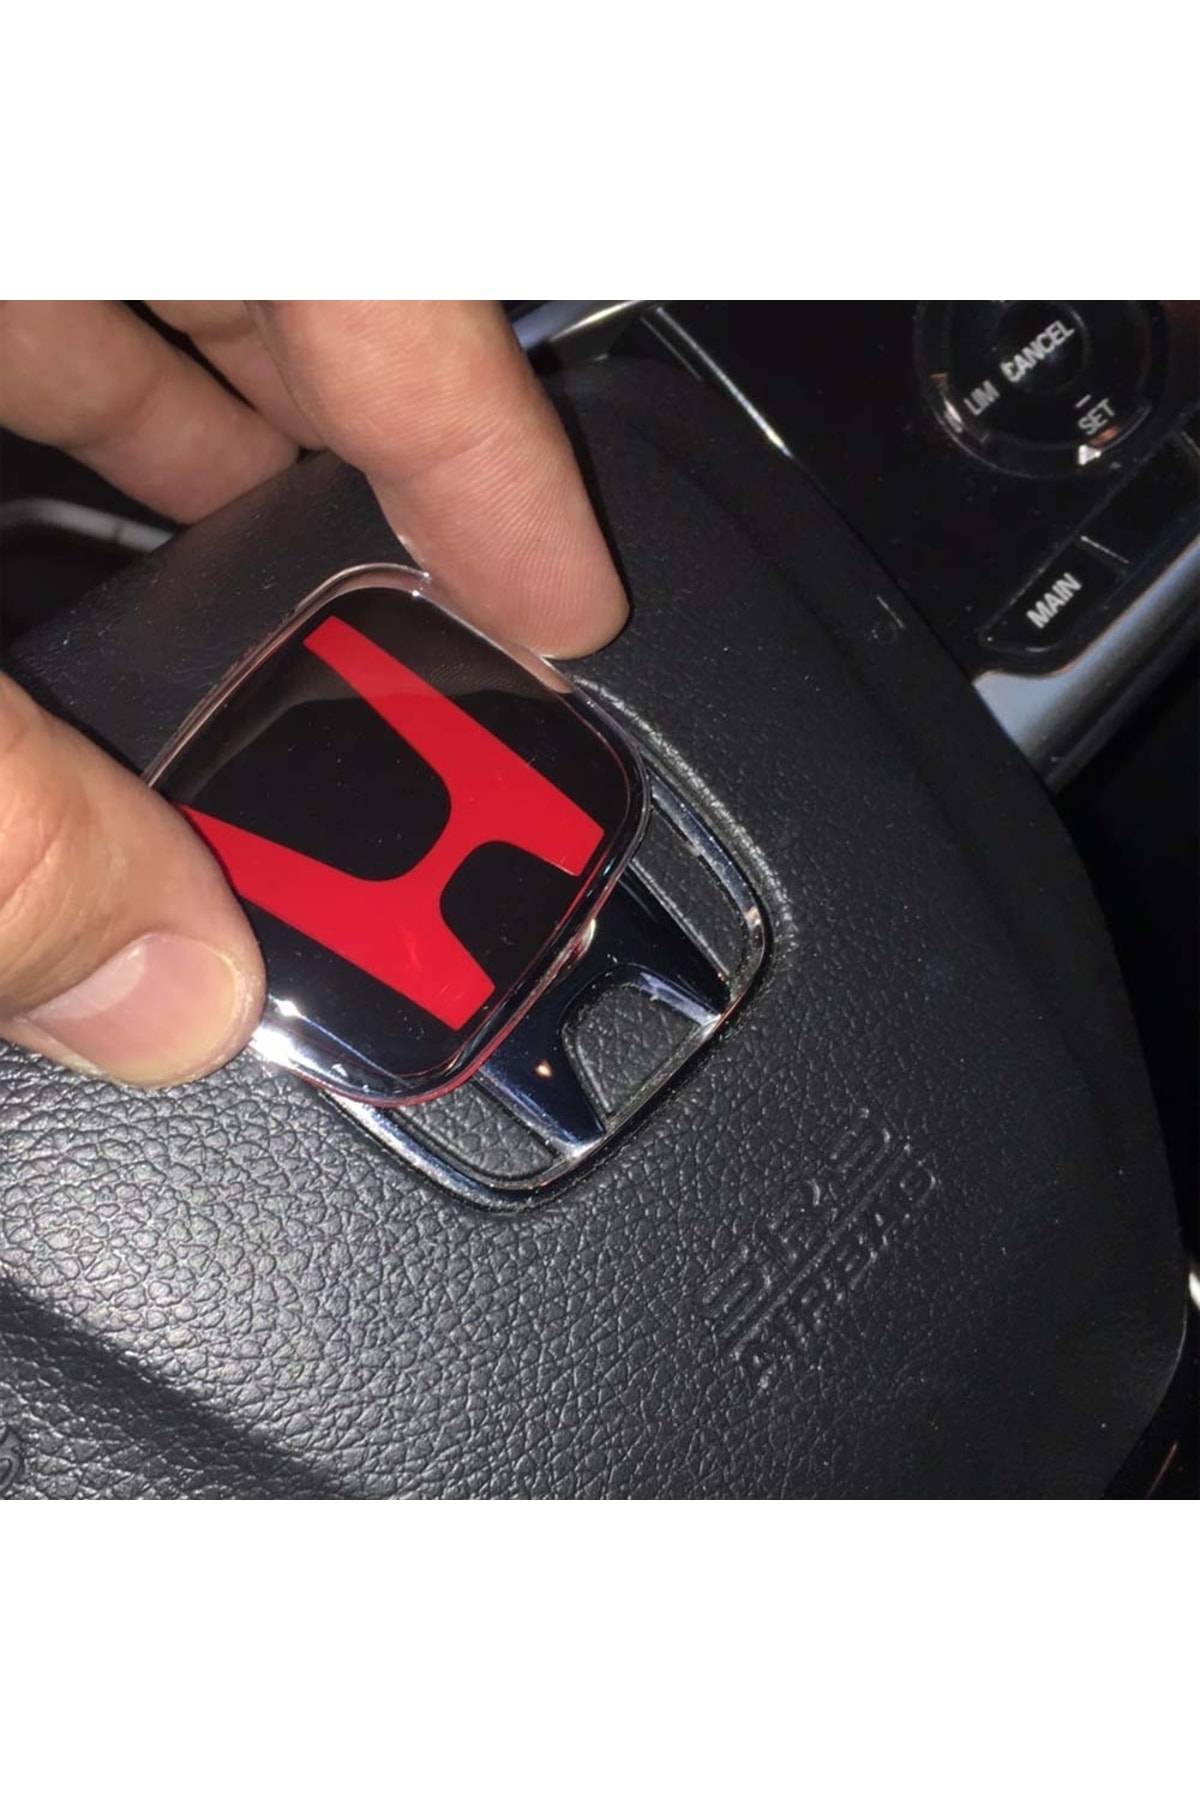 ÇAMKIRAN Honda Civic Fc5 Için Uyumlu Direksiyon Logosu Amblem